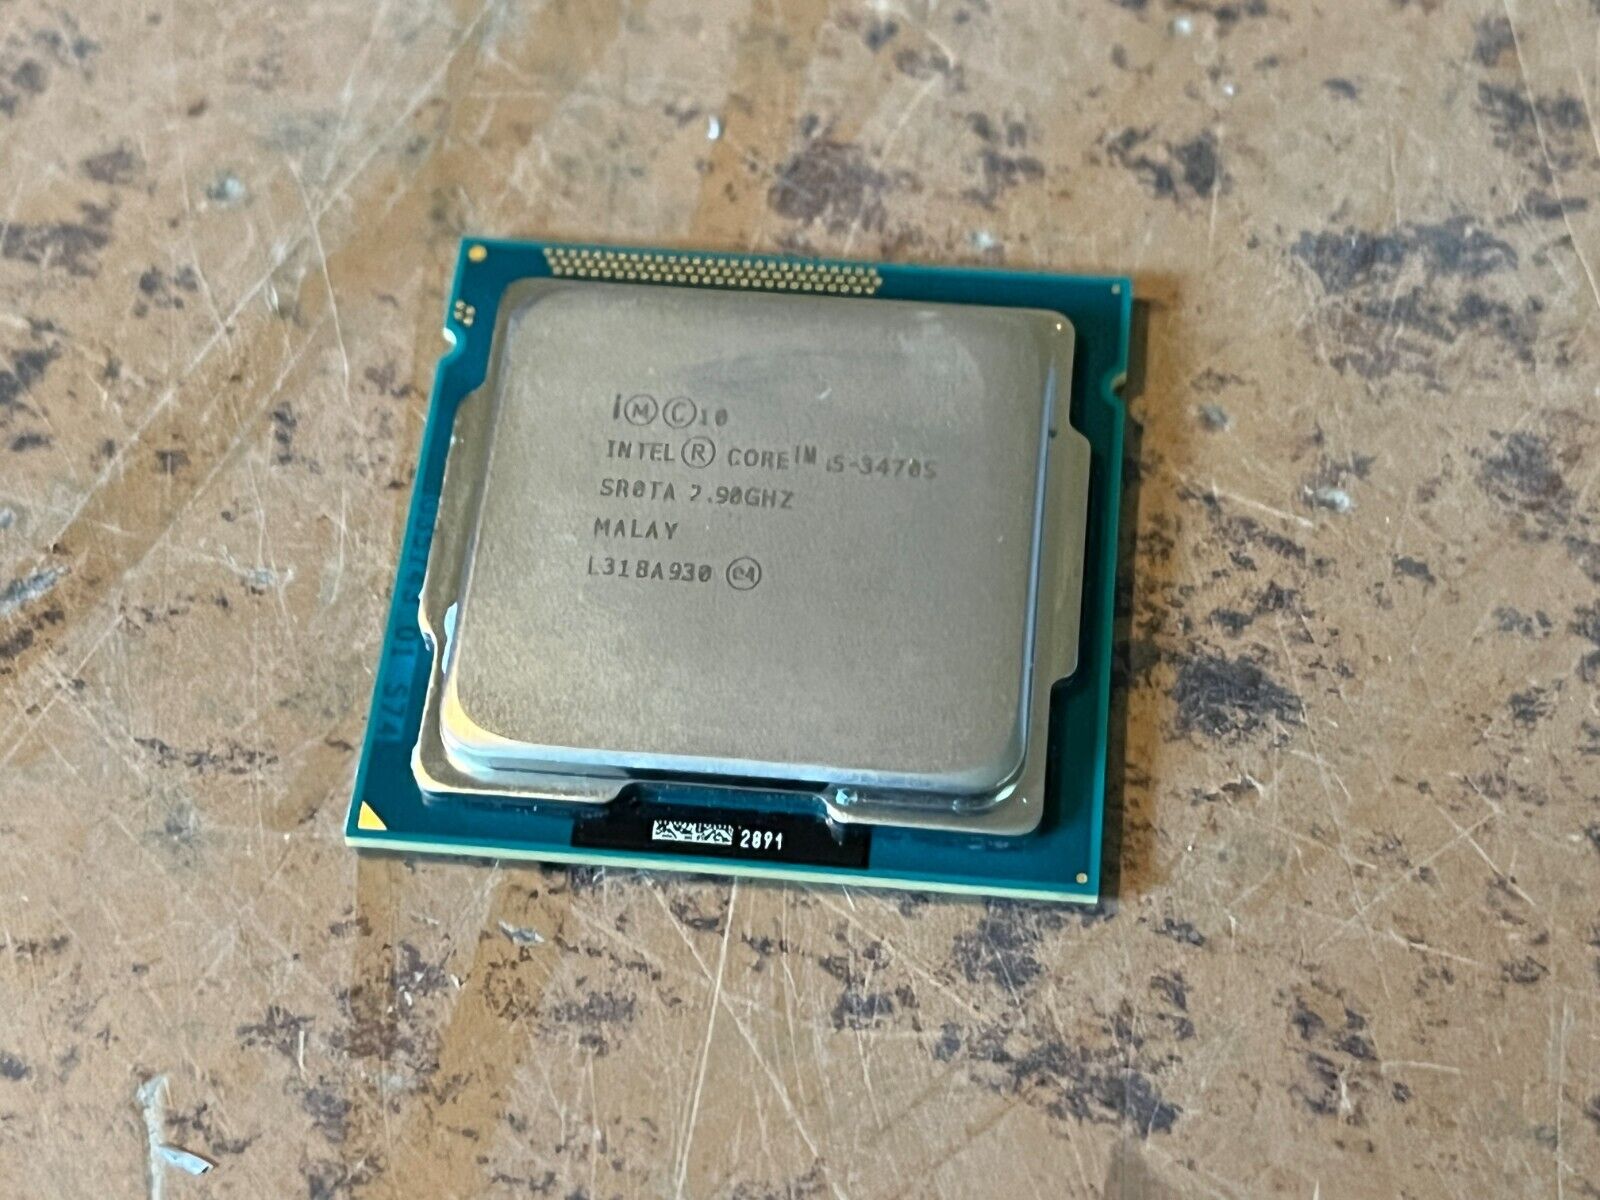 Intel Core i5 3470S SR0TA 2.9GHz Quad Core Processor 6M LGA1155 Socket